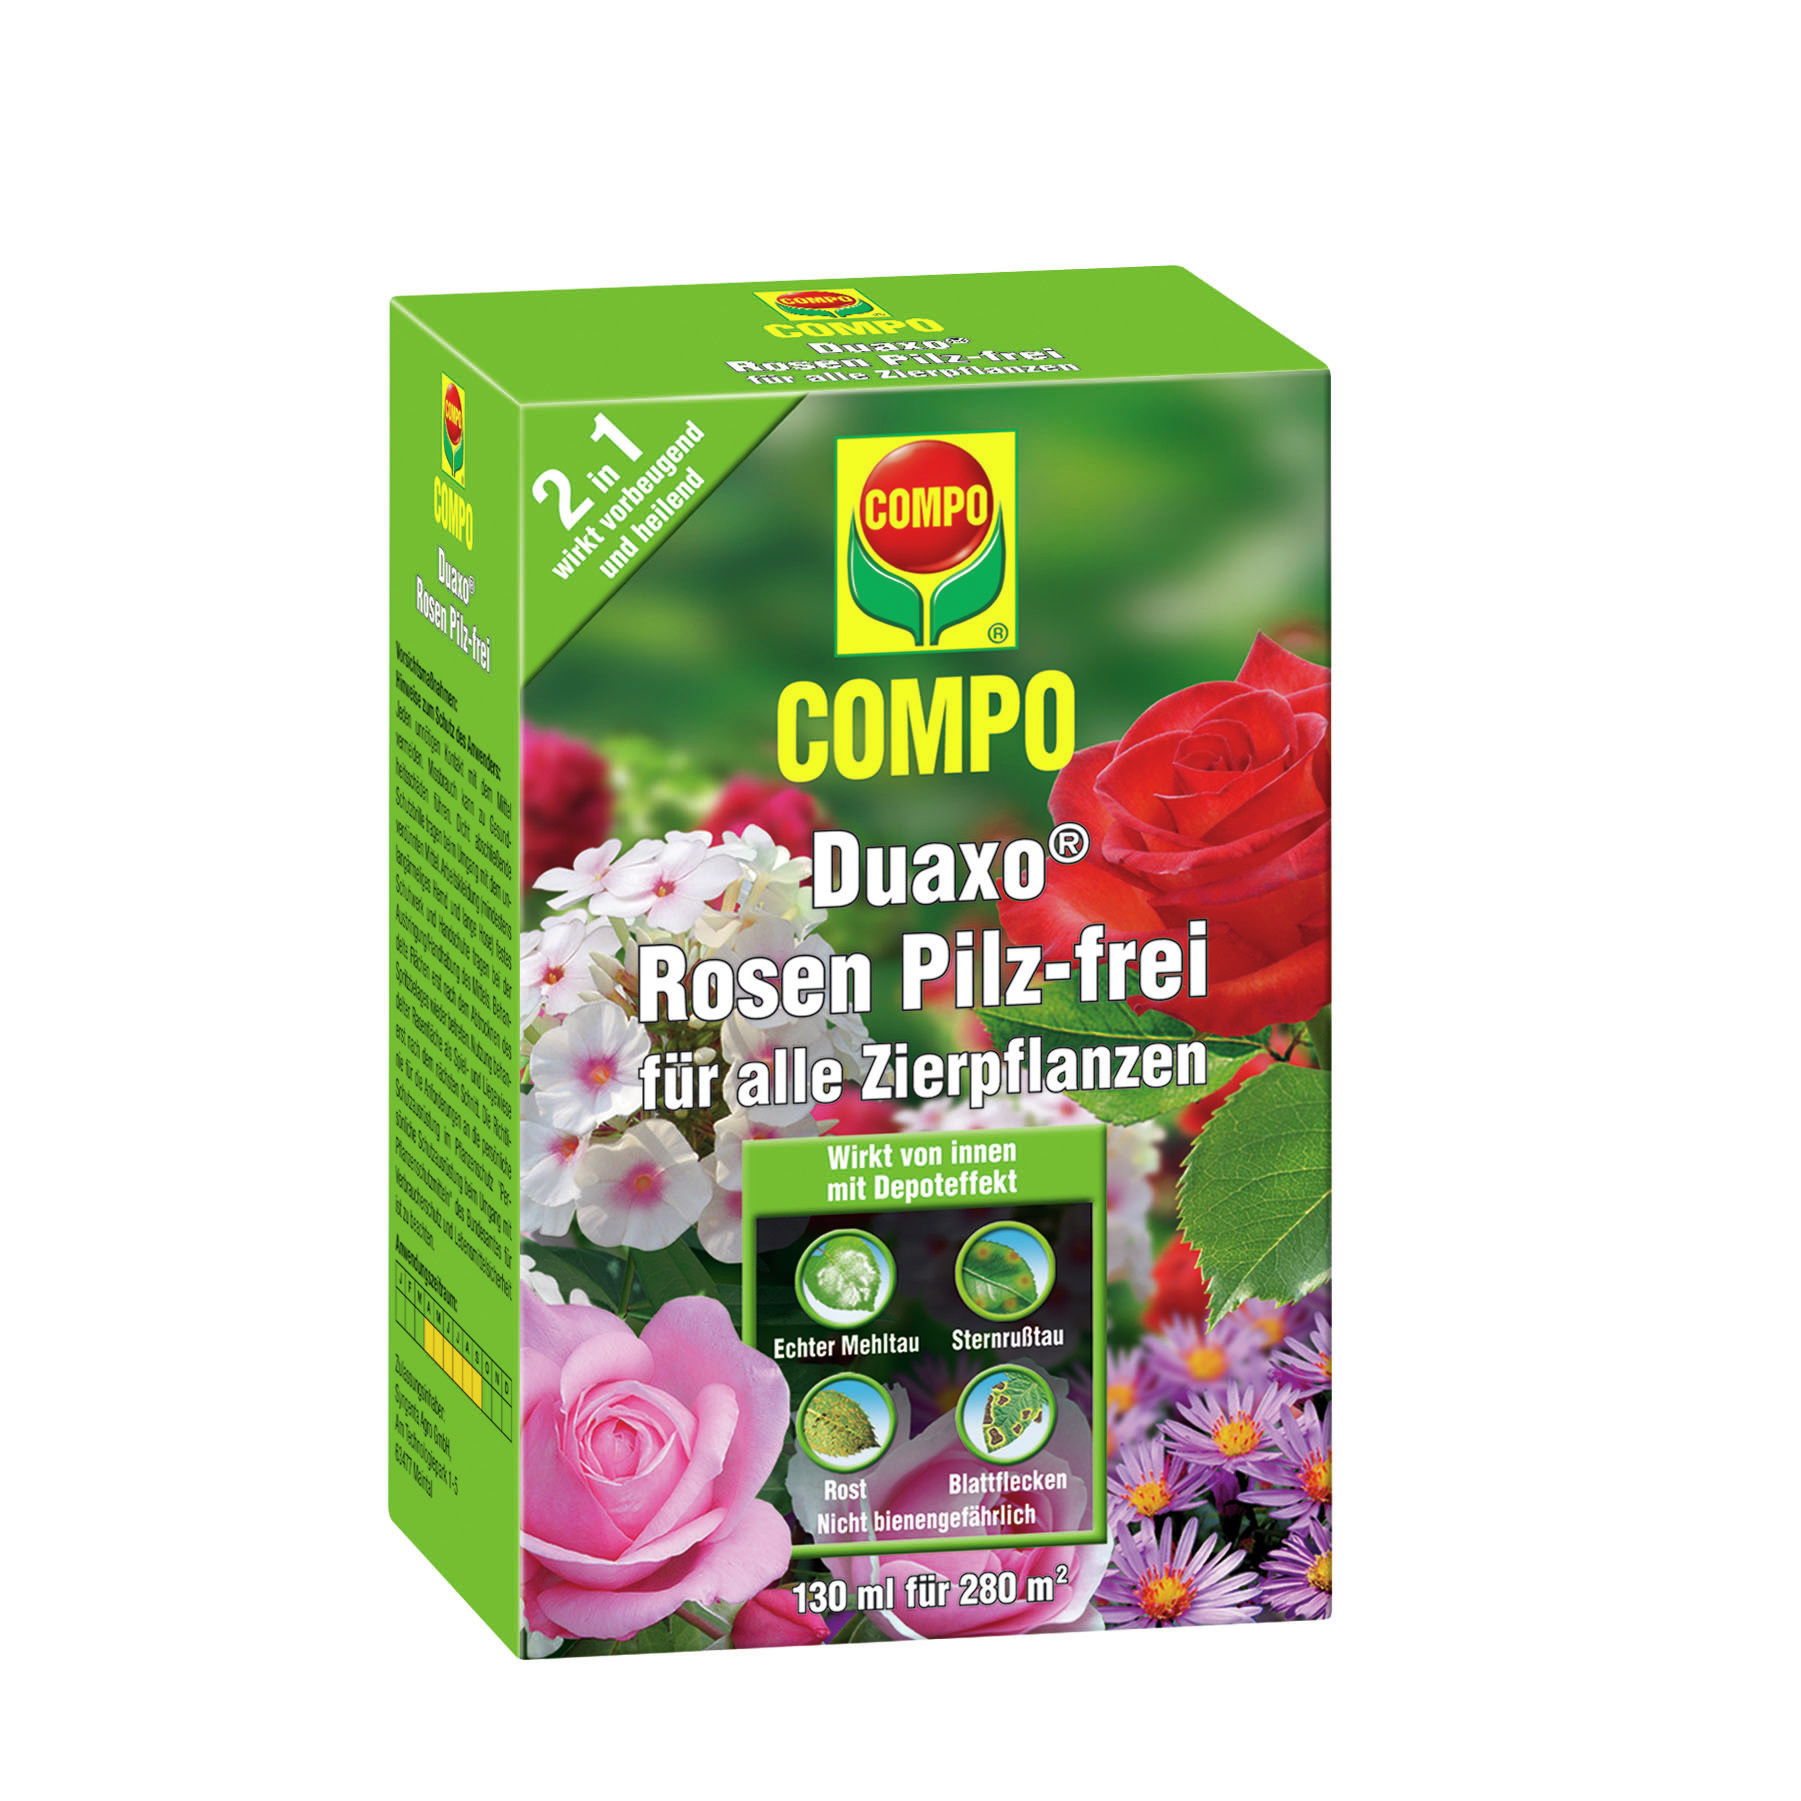 COMPO COMPO Duaxo Rosen Pilz-frei 130ml Compo EREG -B4- für alle Zierpflanzen